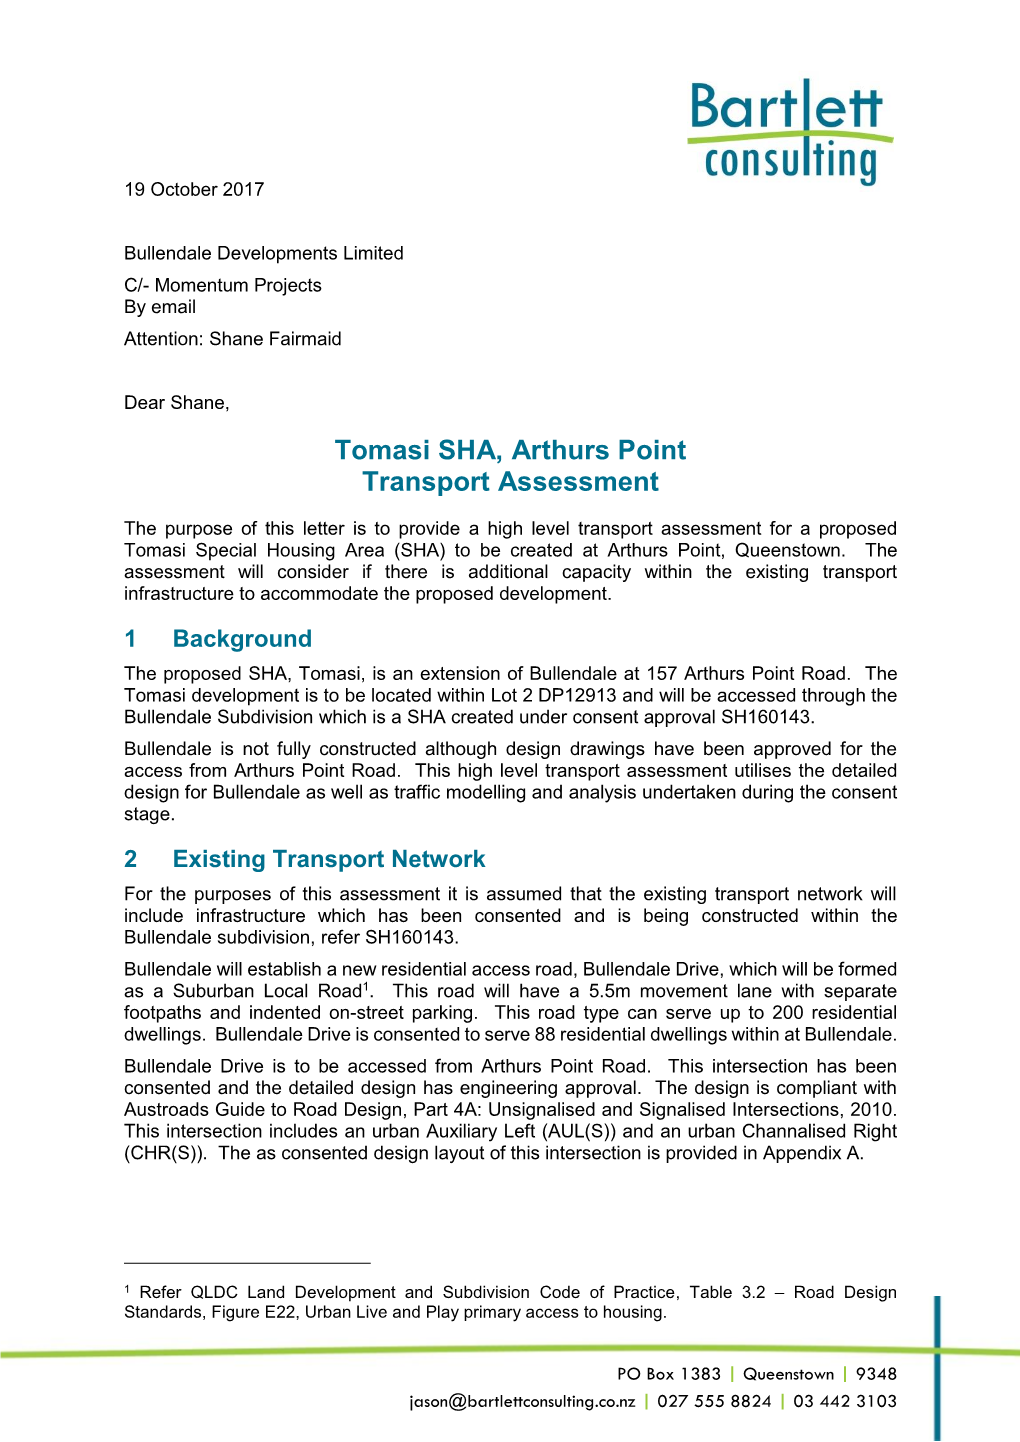 Tomasi SHA, Arthurs Point Transport Assessment